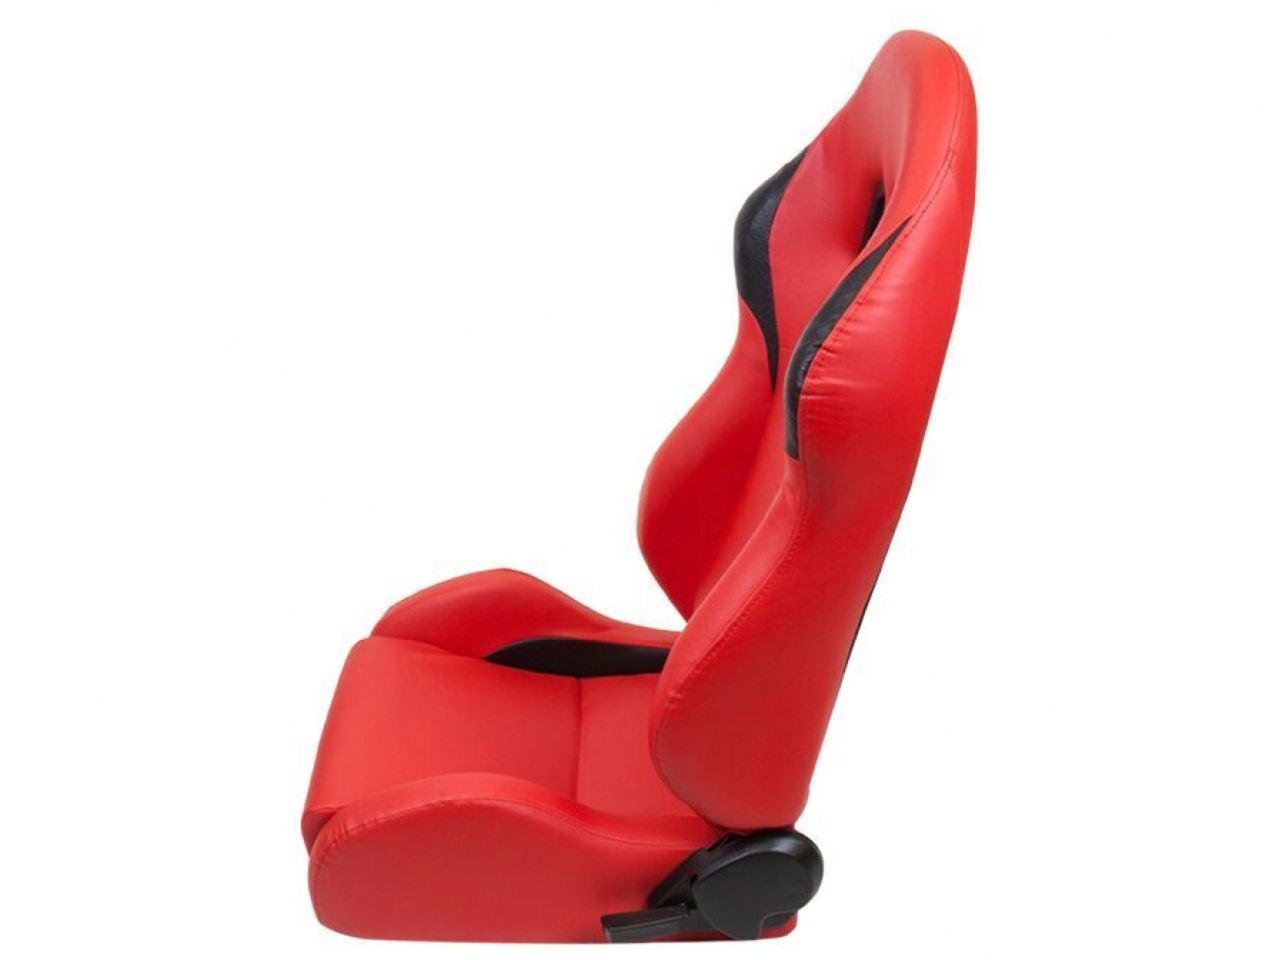 NRG PVC leather Sport Seats Red w/ Black Trim